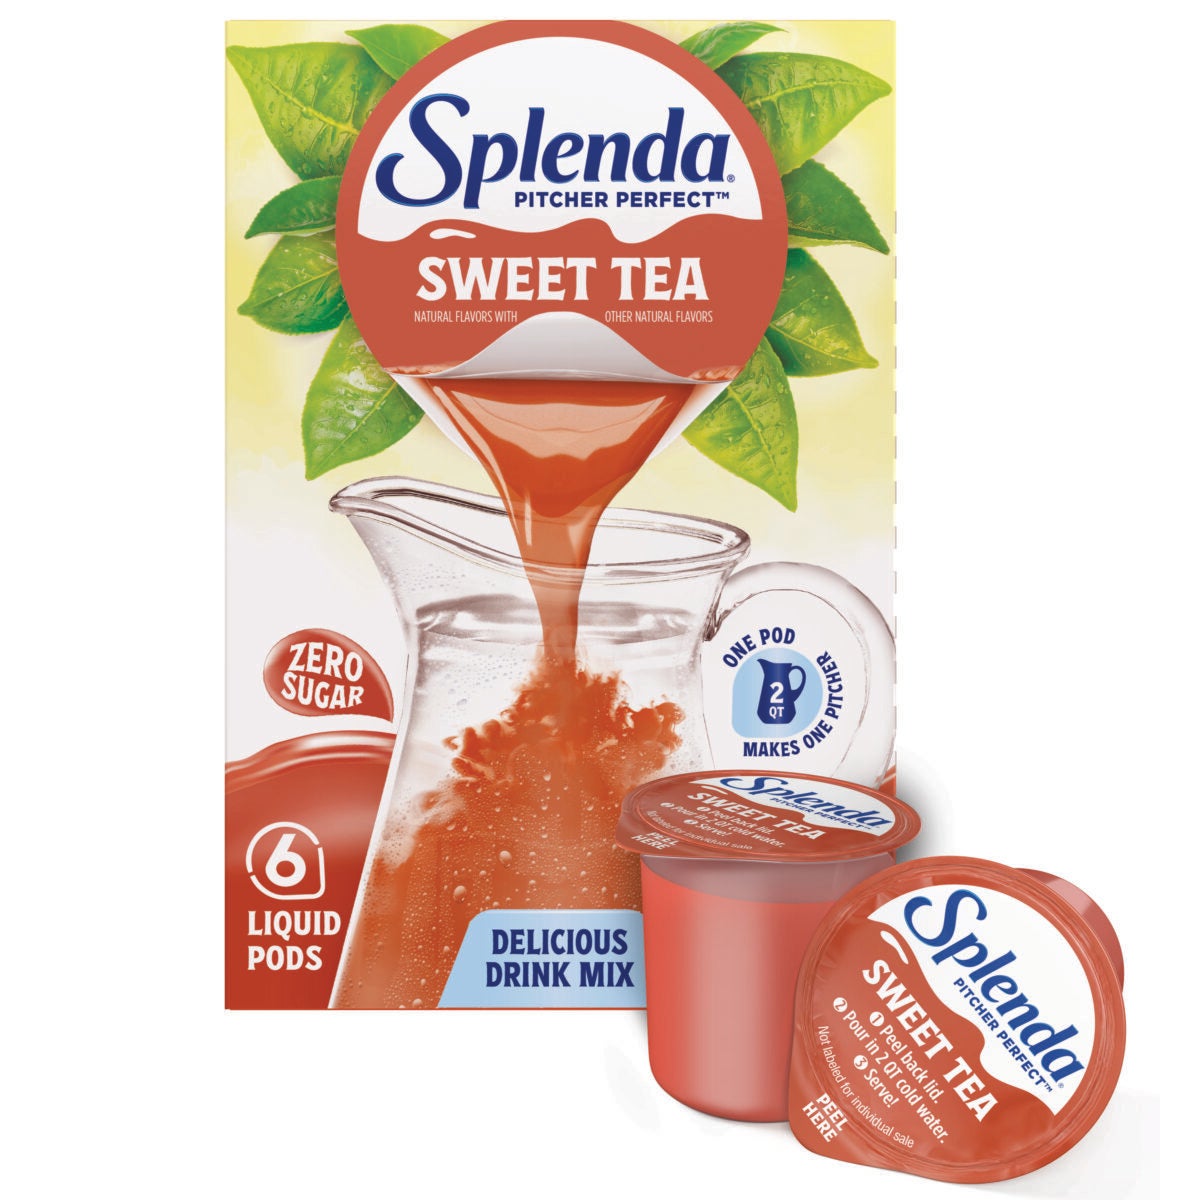 Splenda Pitcher Perfect Sweet Tea Zero Sugar Drink Mix – Front